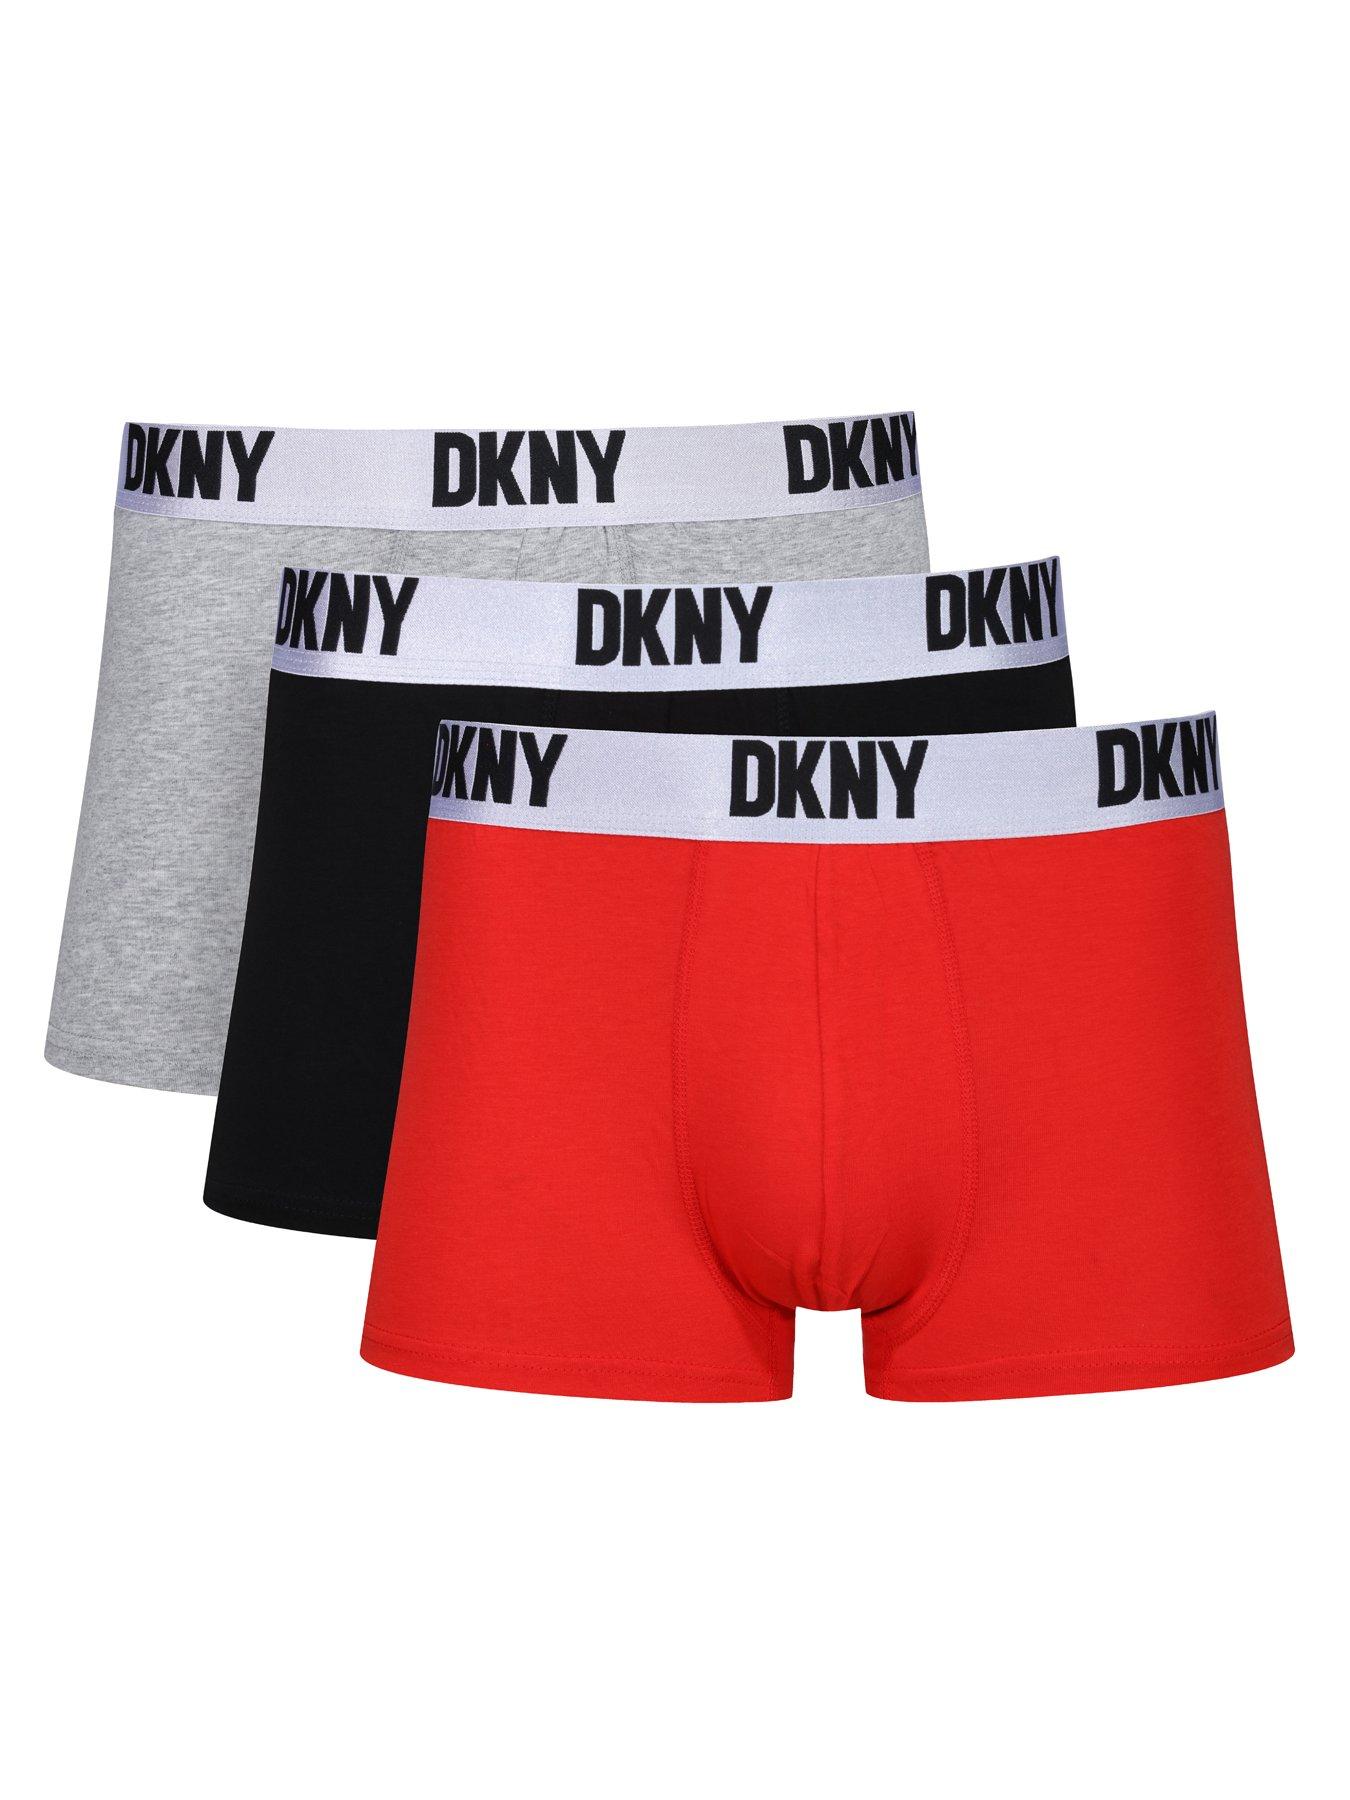 DKNY, Portland 5 Pack Trunk Boxer Shorts